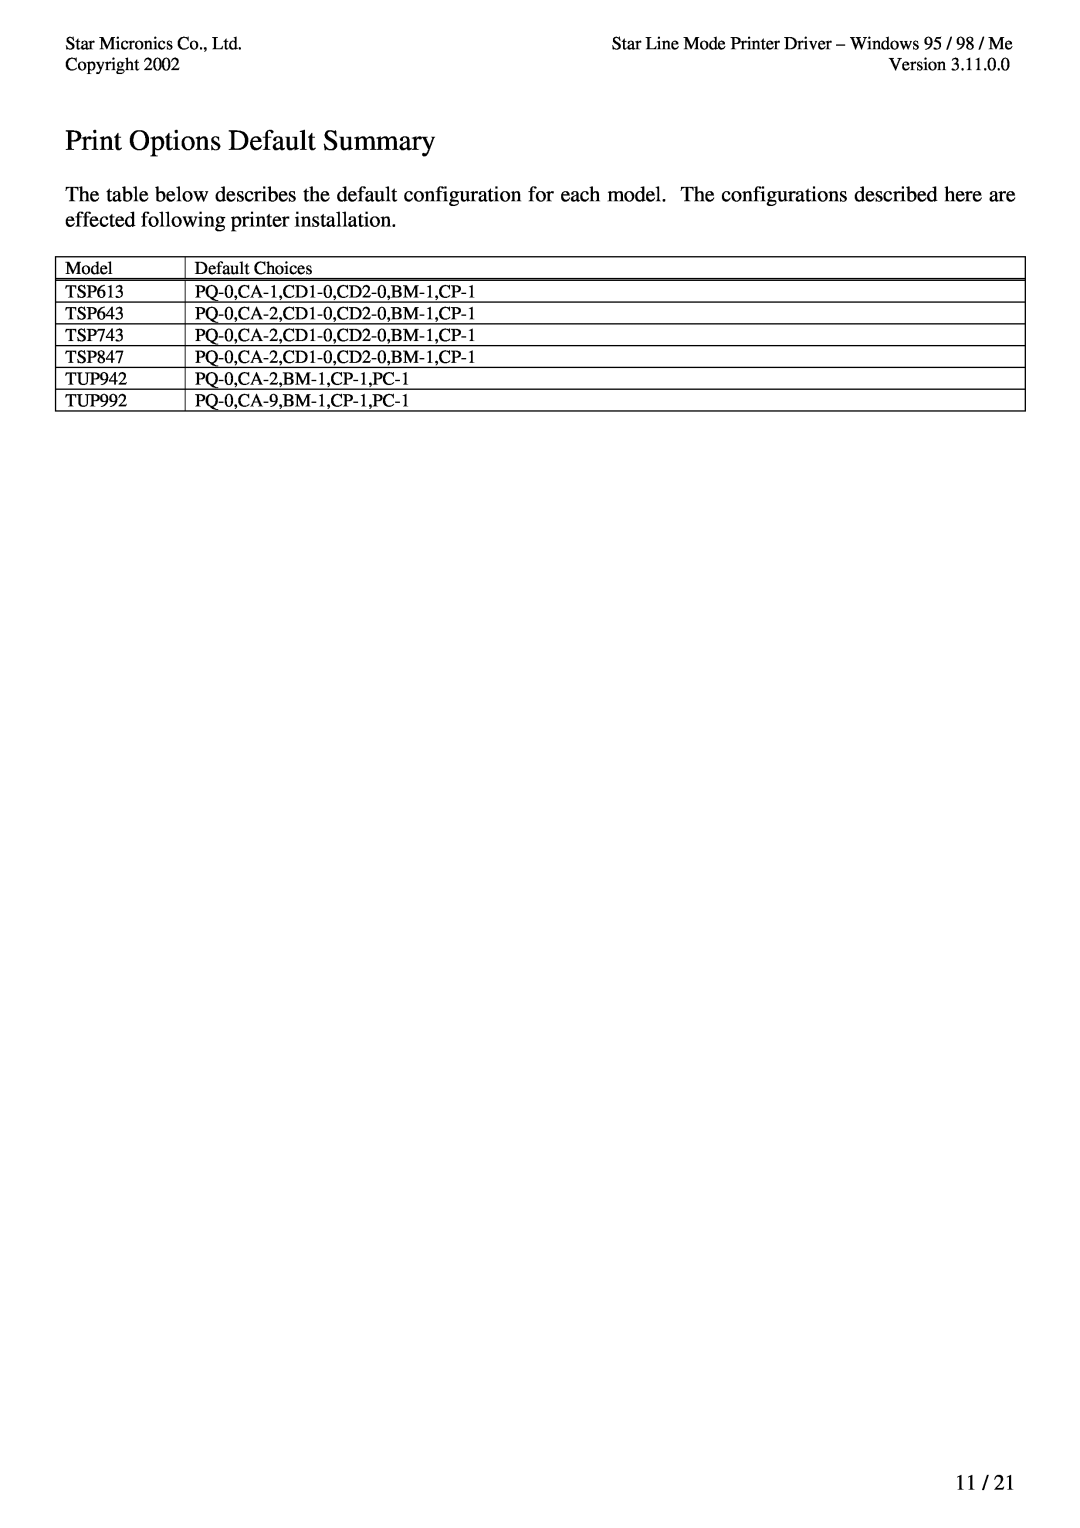 Star Micronics TUP992 user manual Print Options Default Summary 